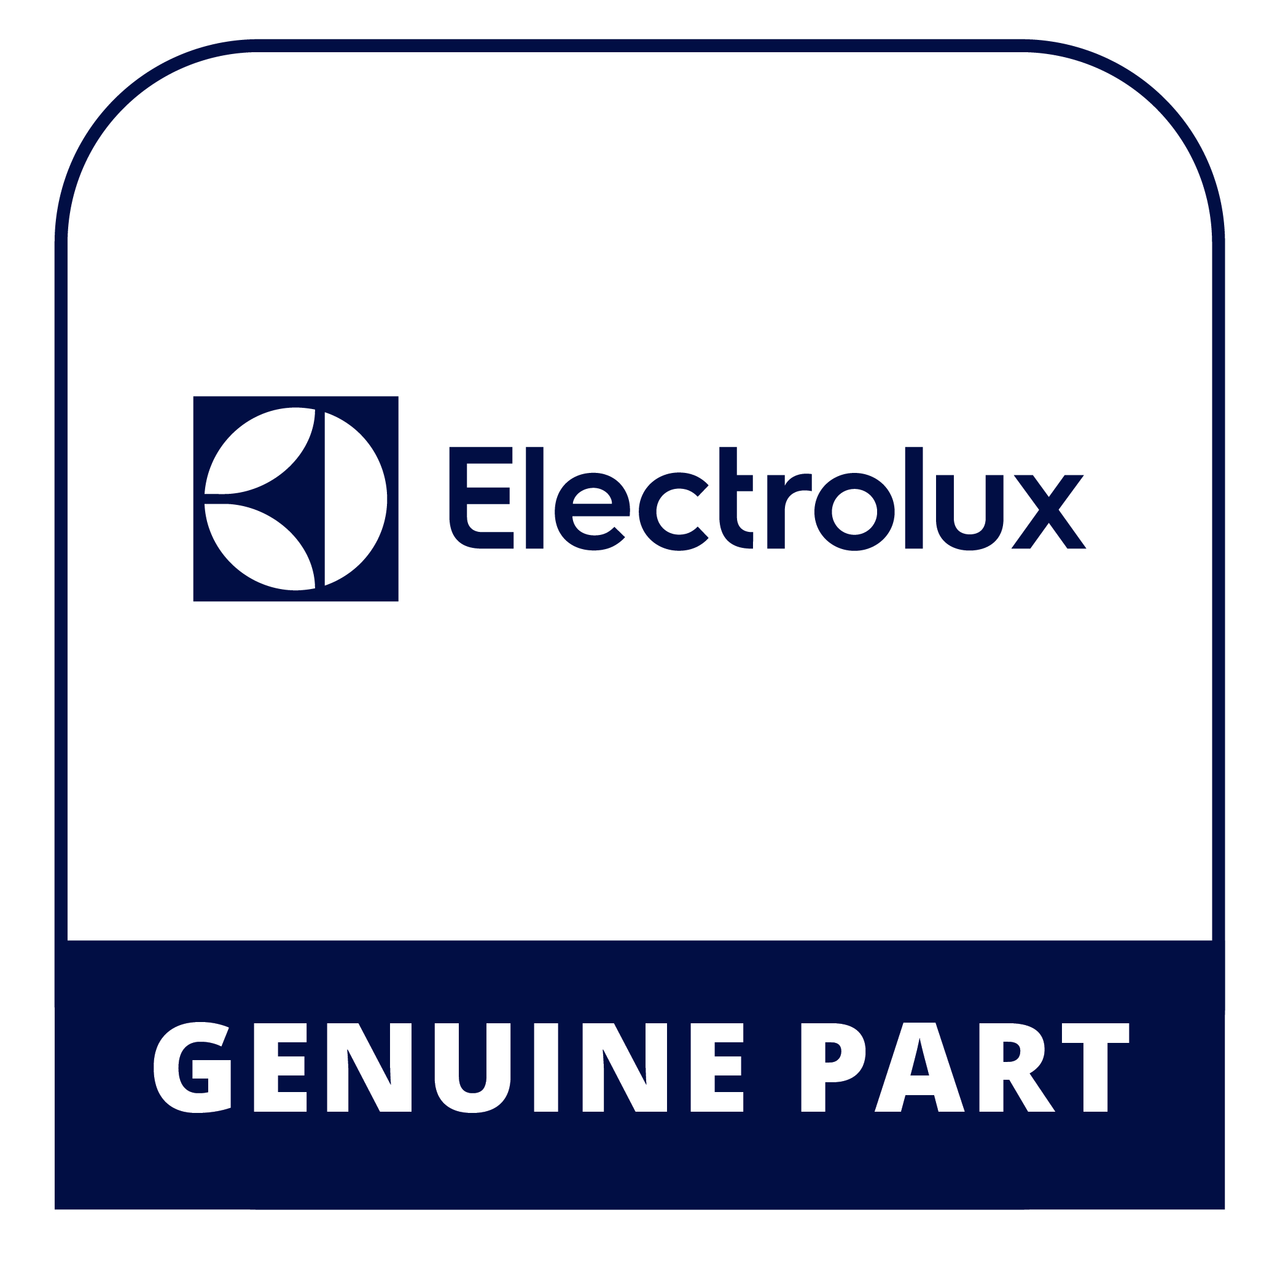 Frigidaire - Electrolux 5304490890 Door Assembly - Genuine Electrolux Part